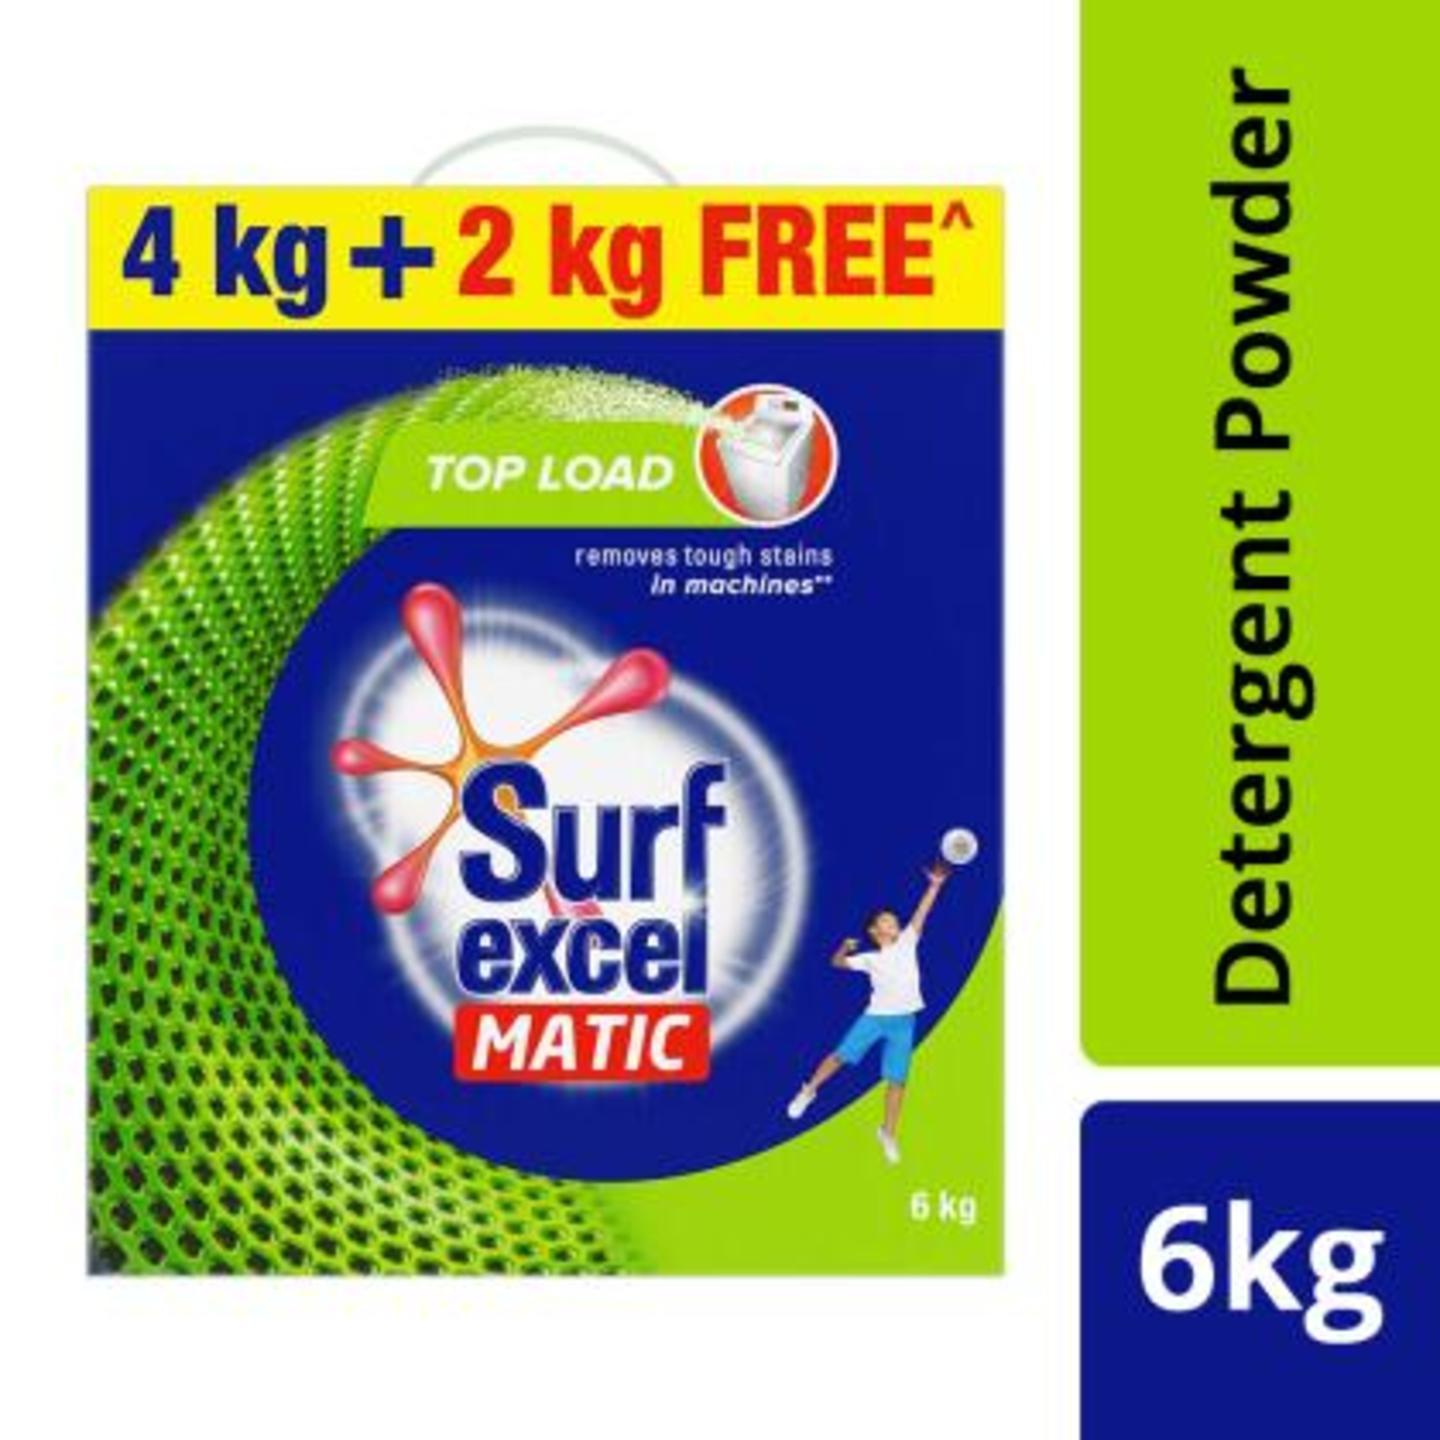 Surf Excel Matic Top Load Detergent Powder 4 kg (Get Extra 2 kg Free)